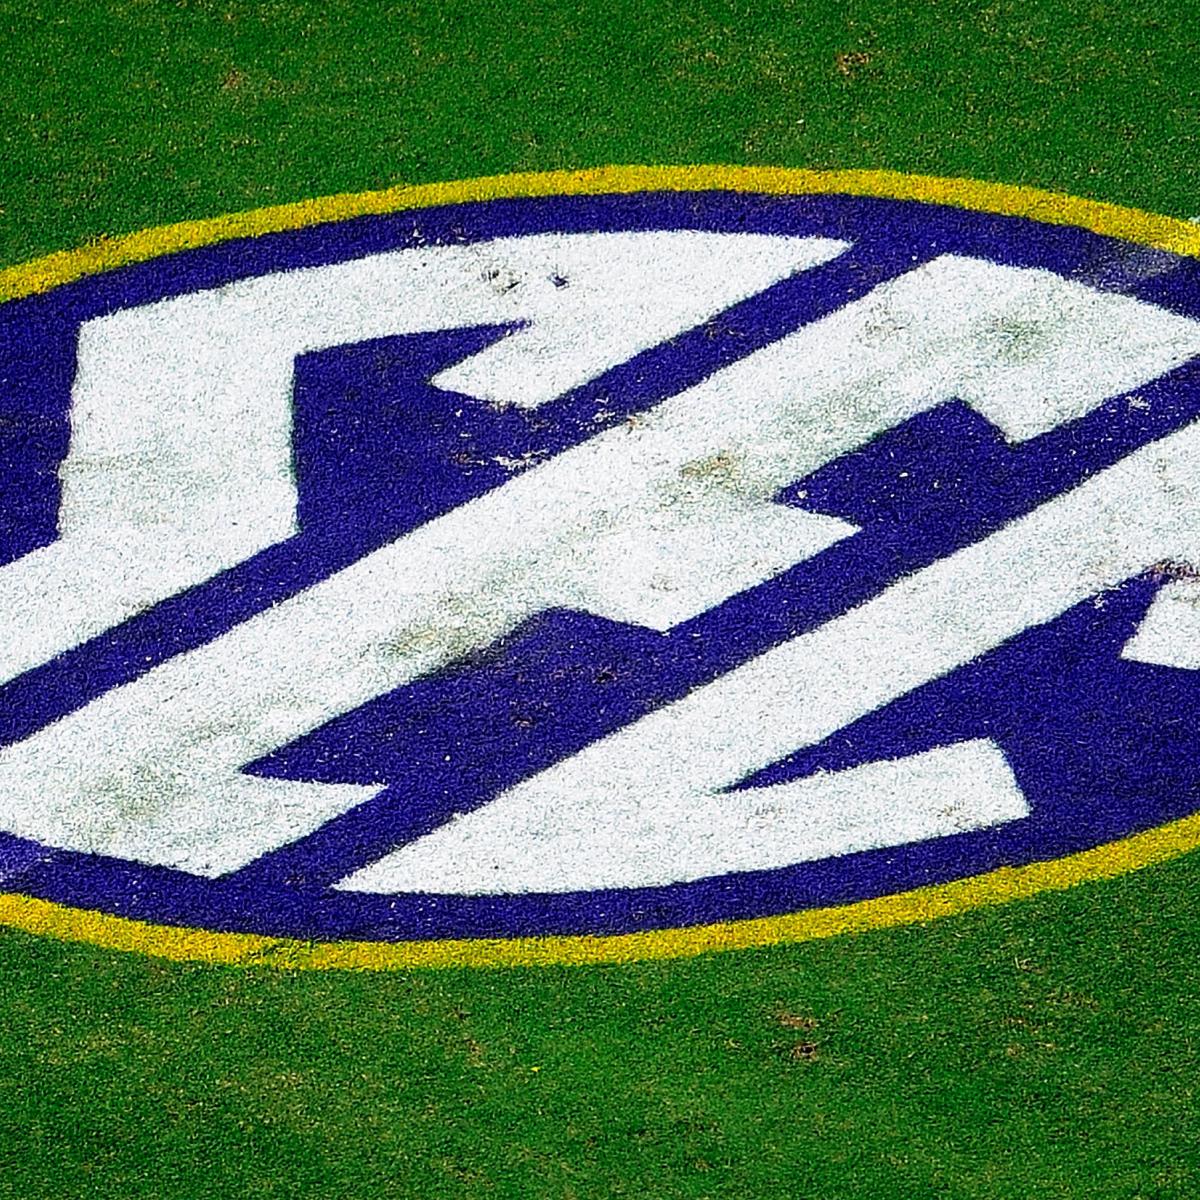 SEC Extra Points: Coaches, Stop Subtweeting Recruits | News, Scores ...